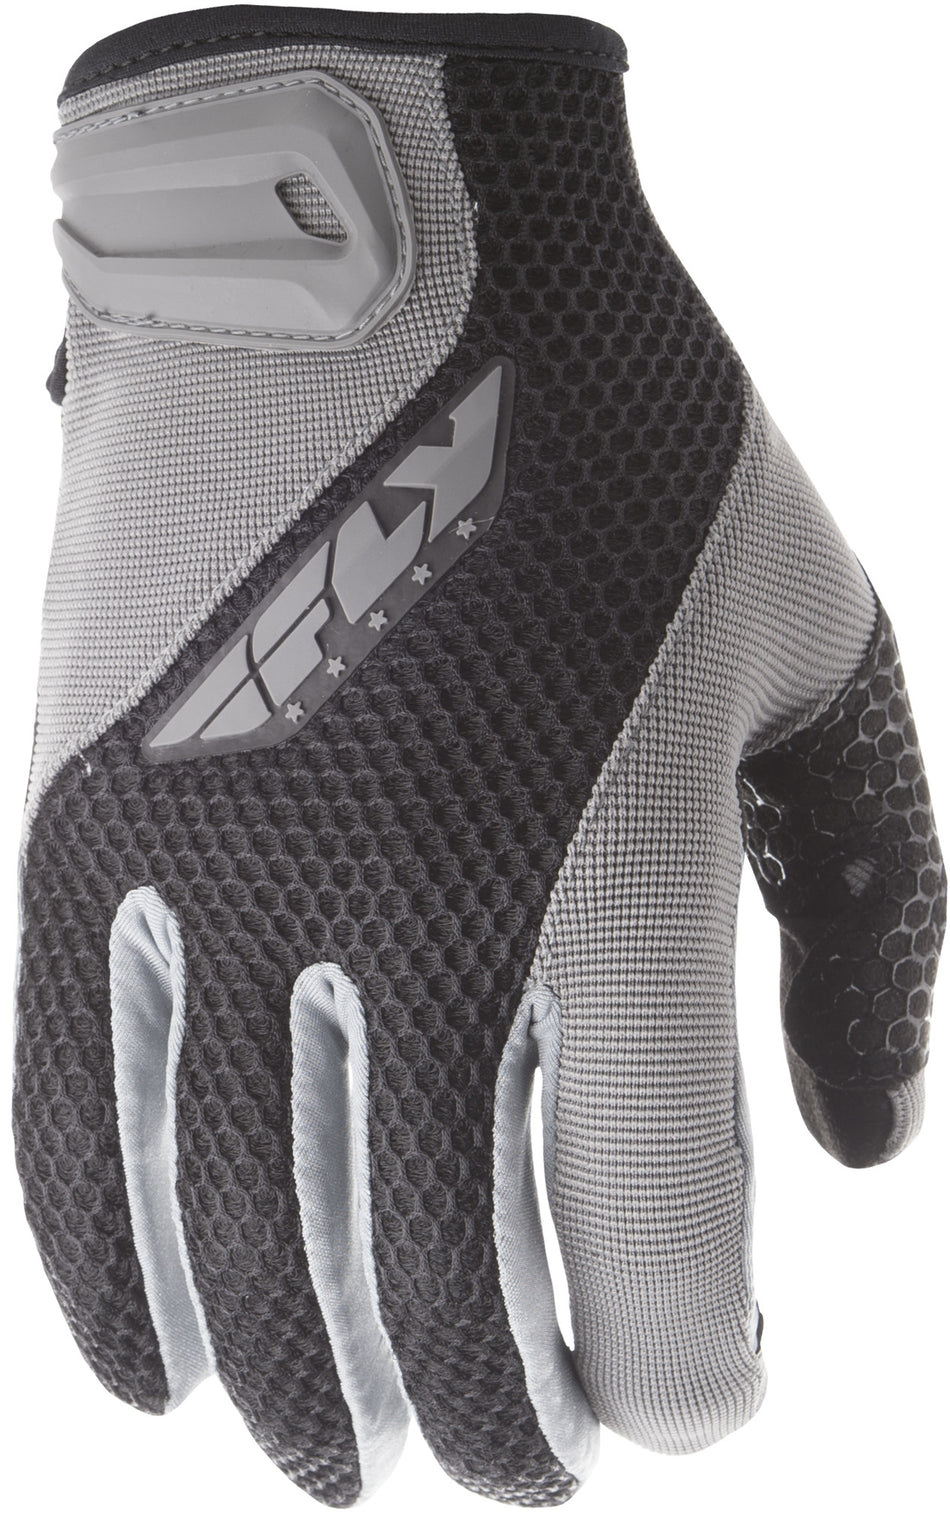 FLY RACING Coolpro Gloves Gunmetal/Black Sm #5884 476-4023~2